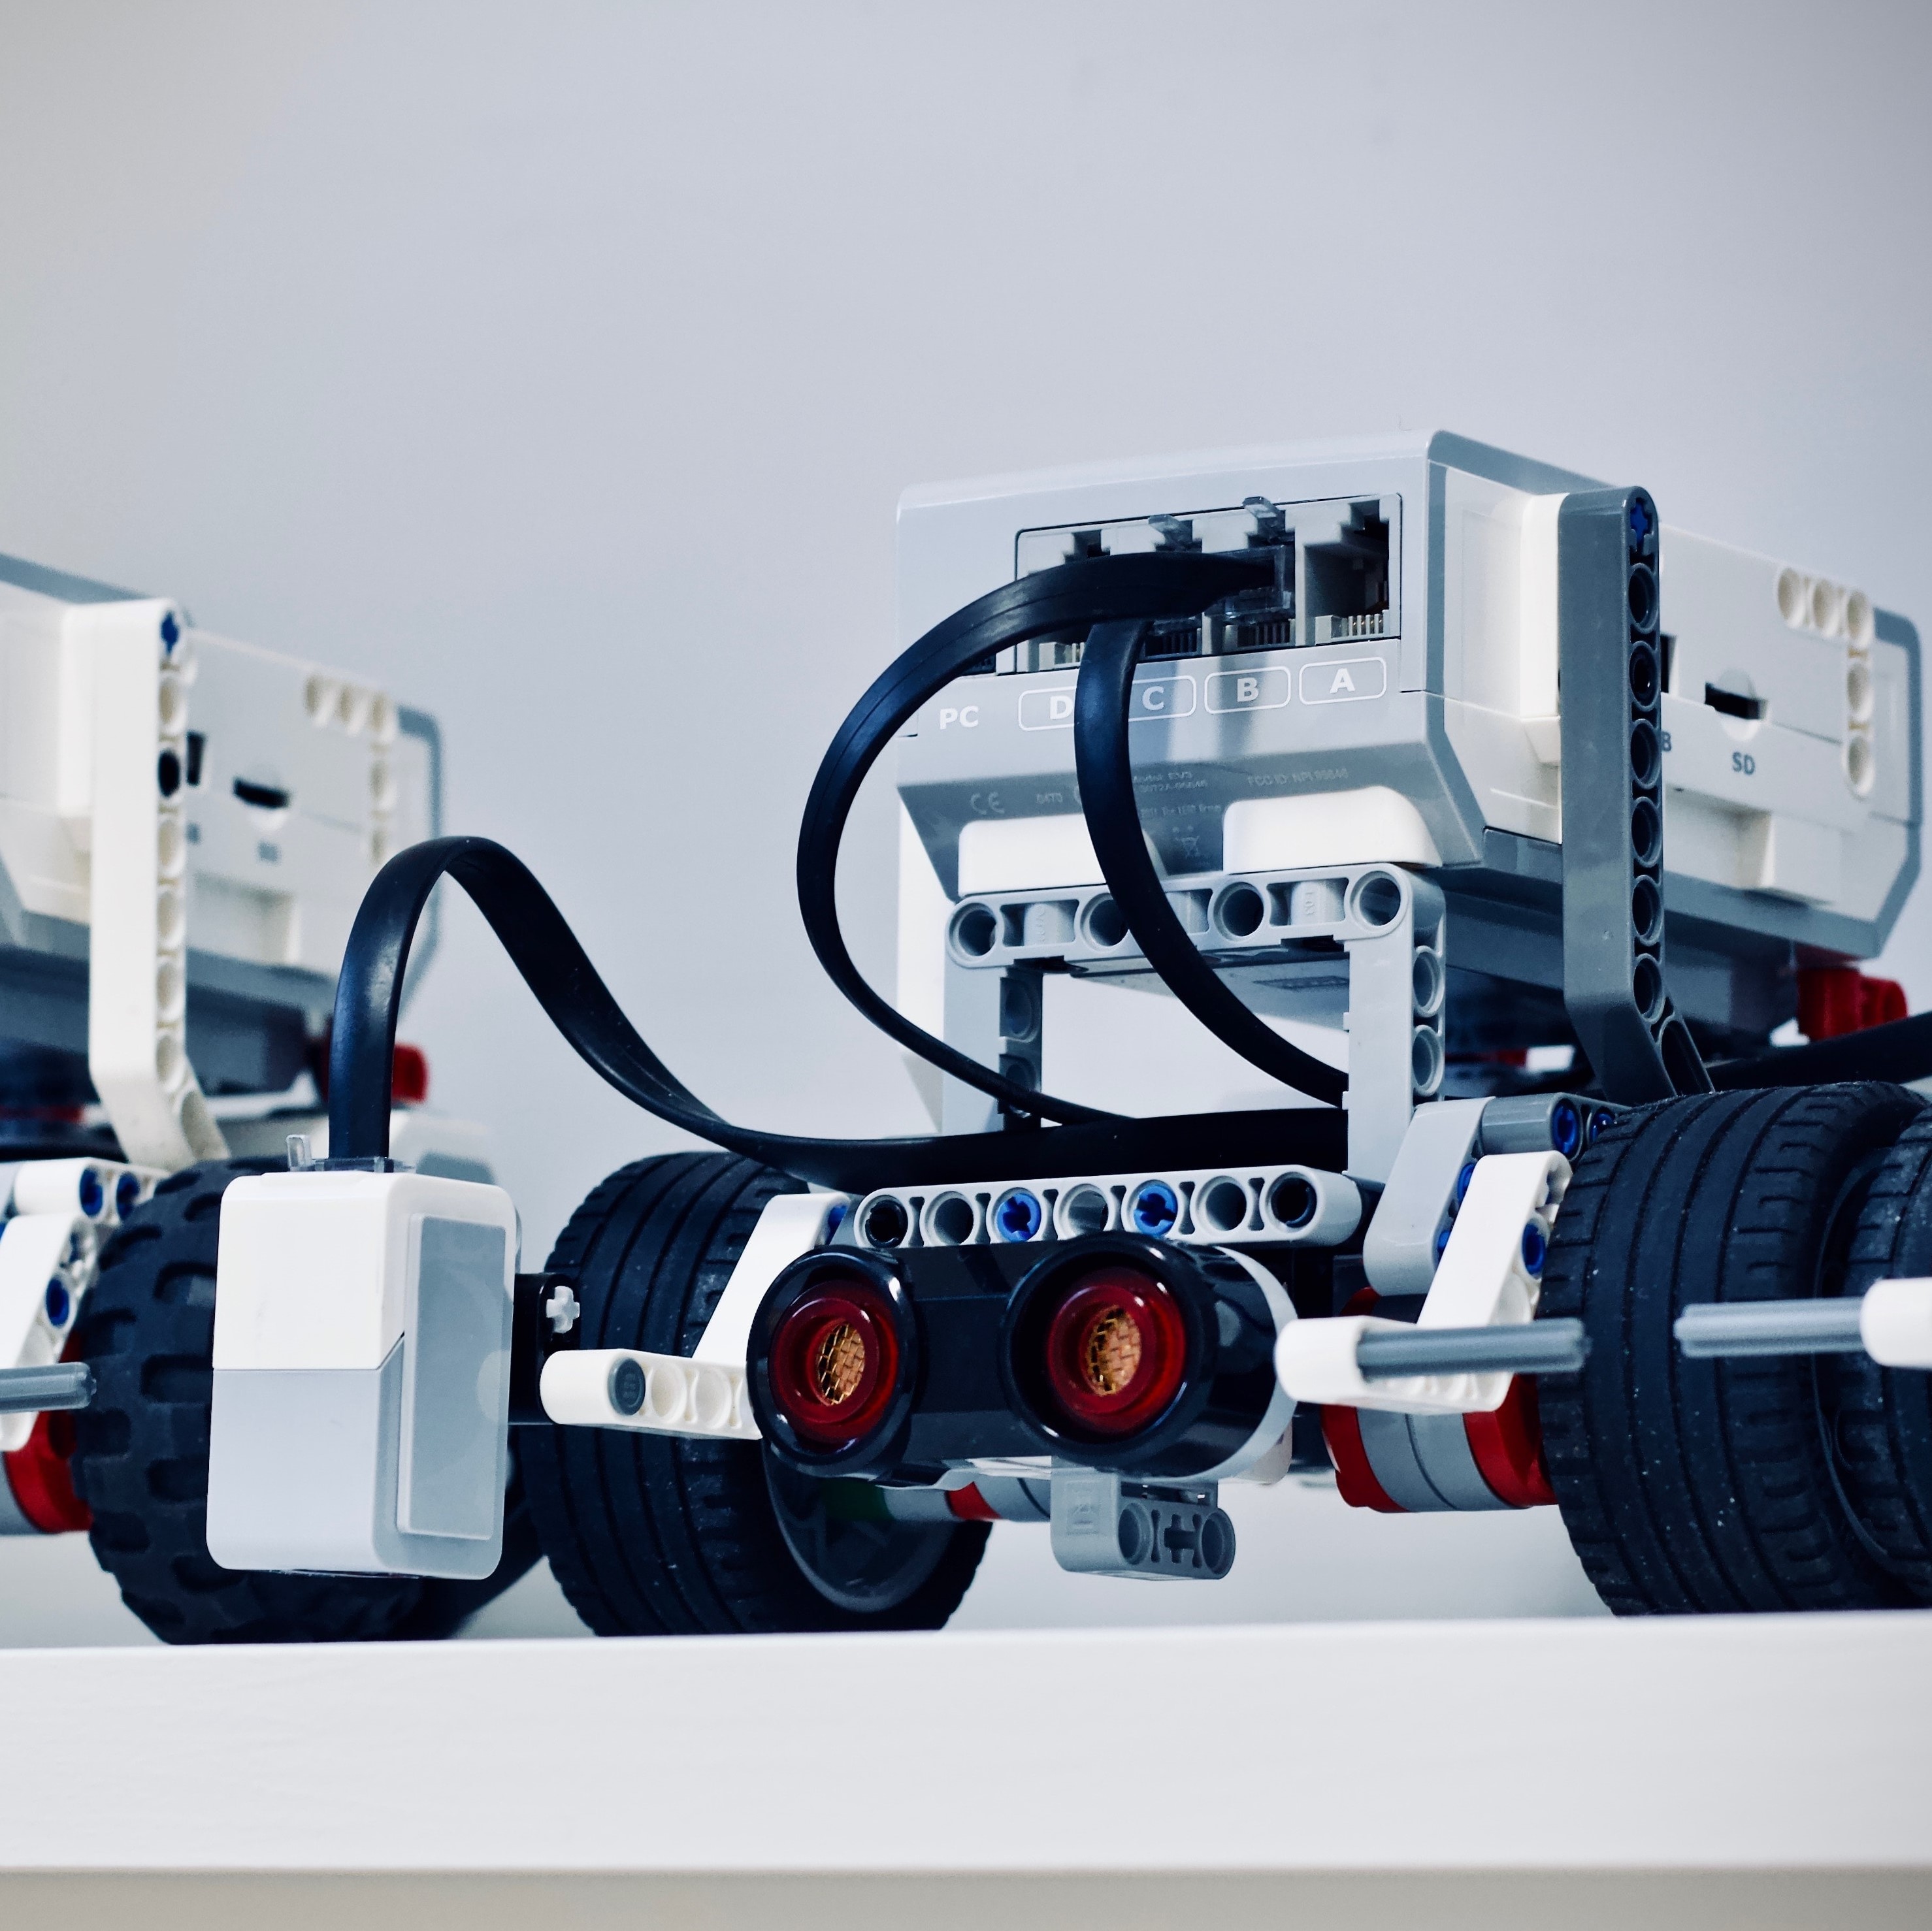 LEGO robots